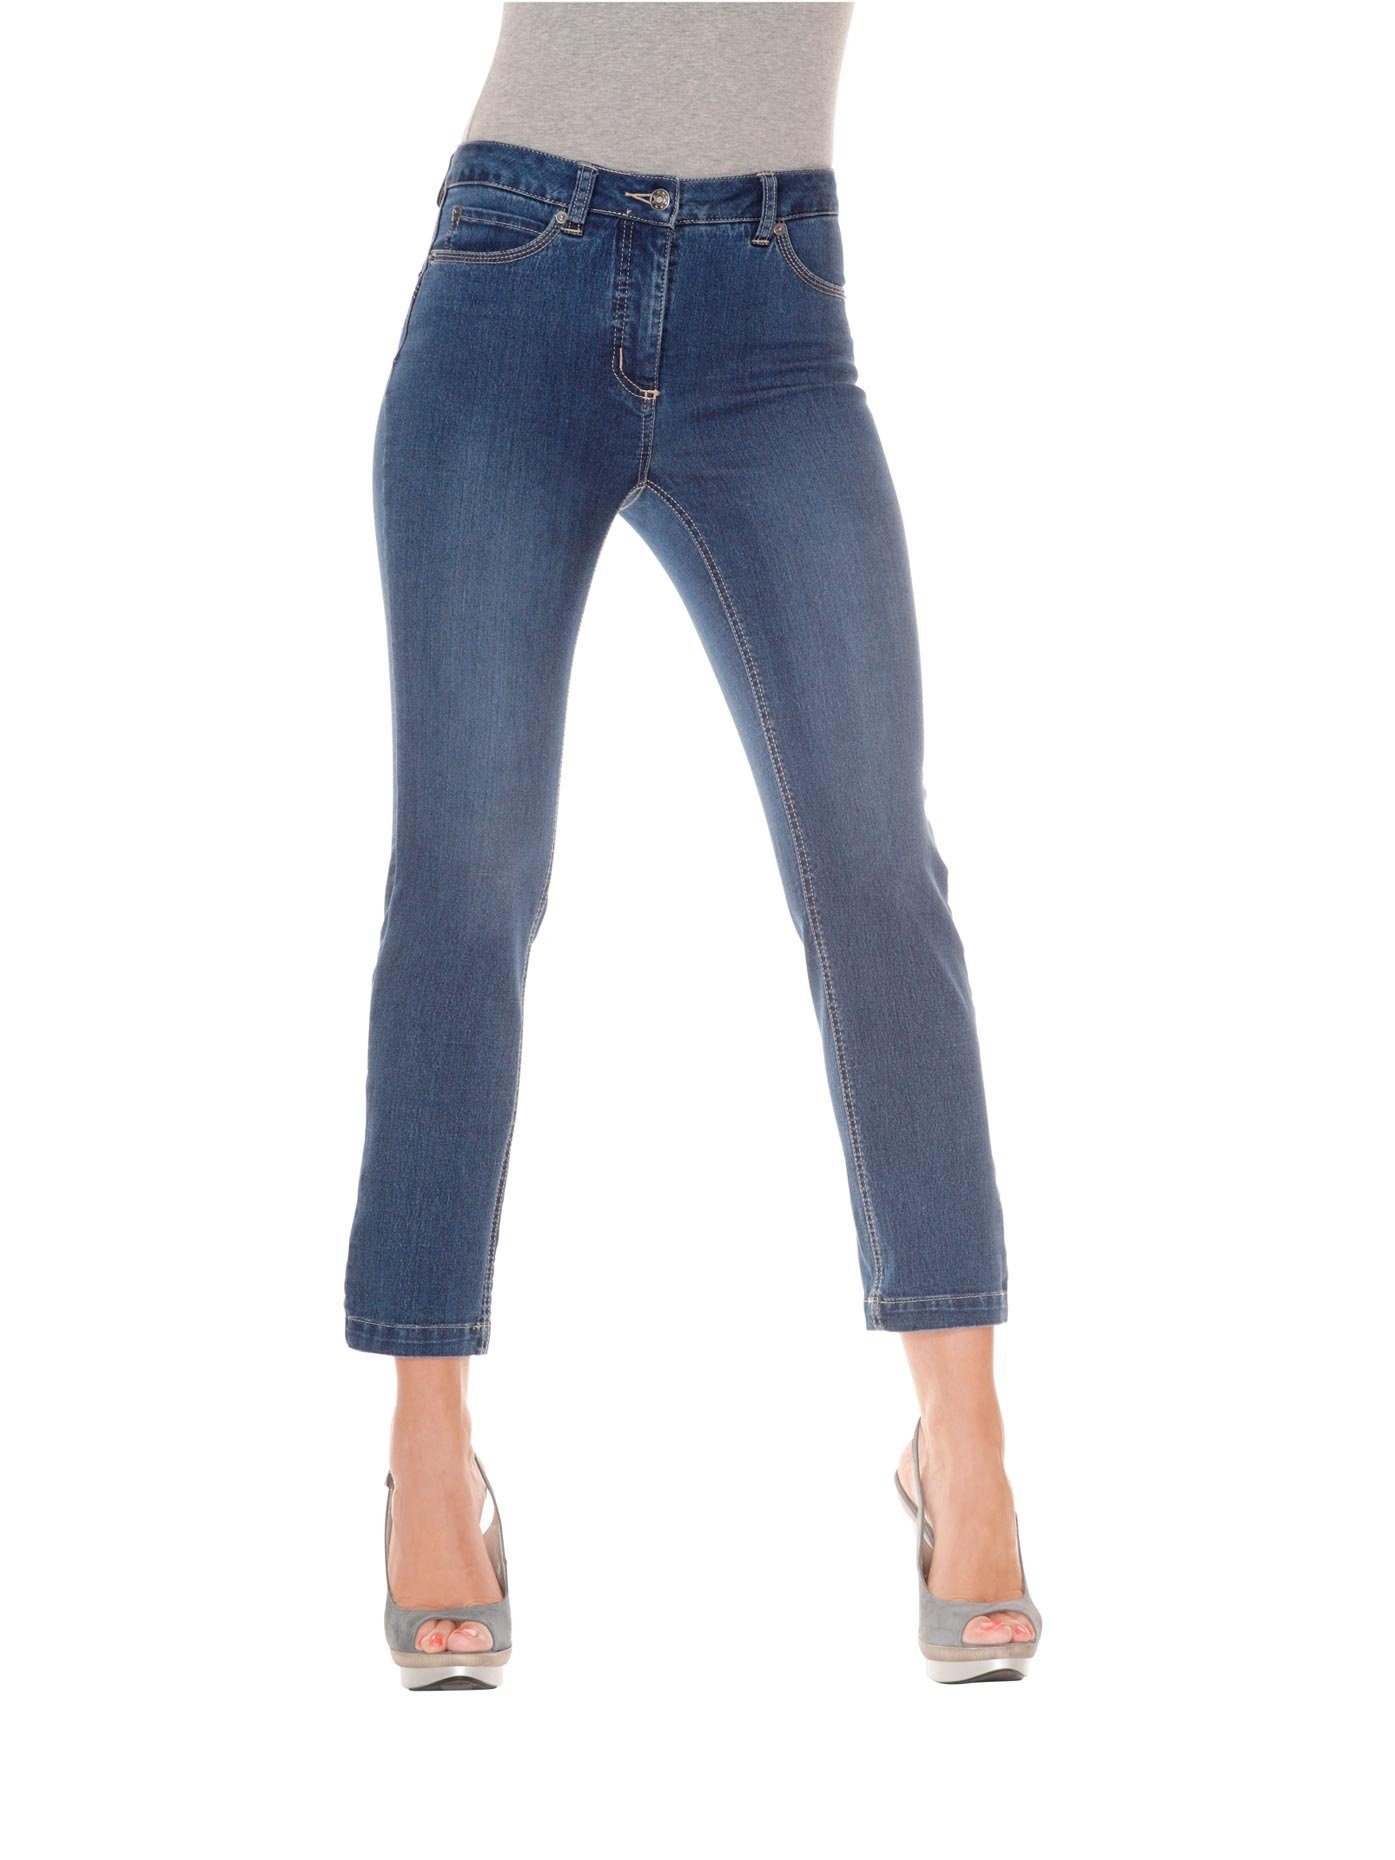 Bodyforming-7-8-jeans